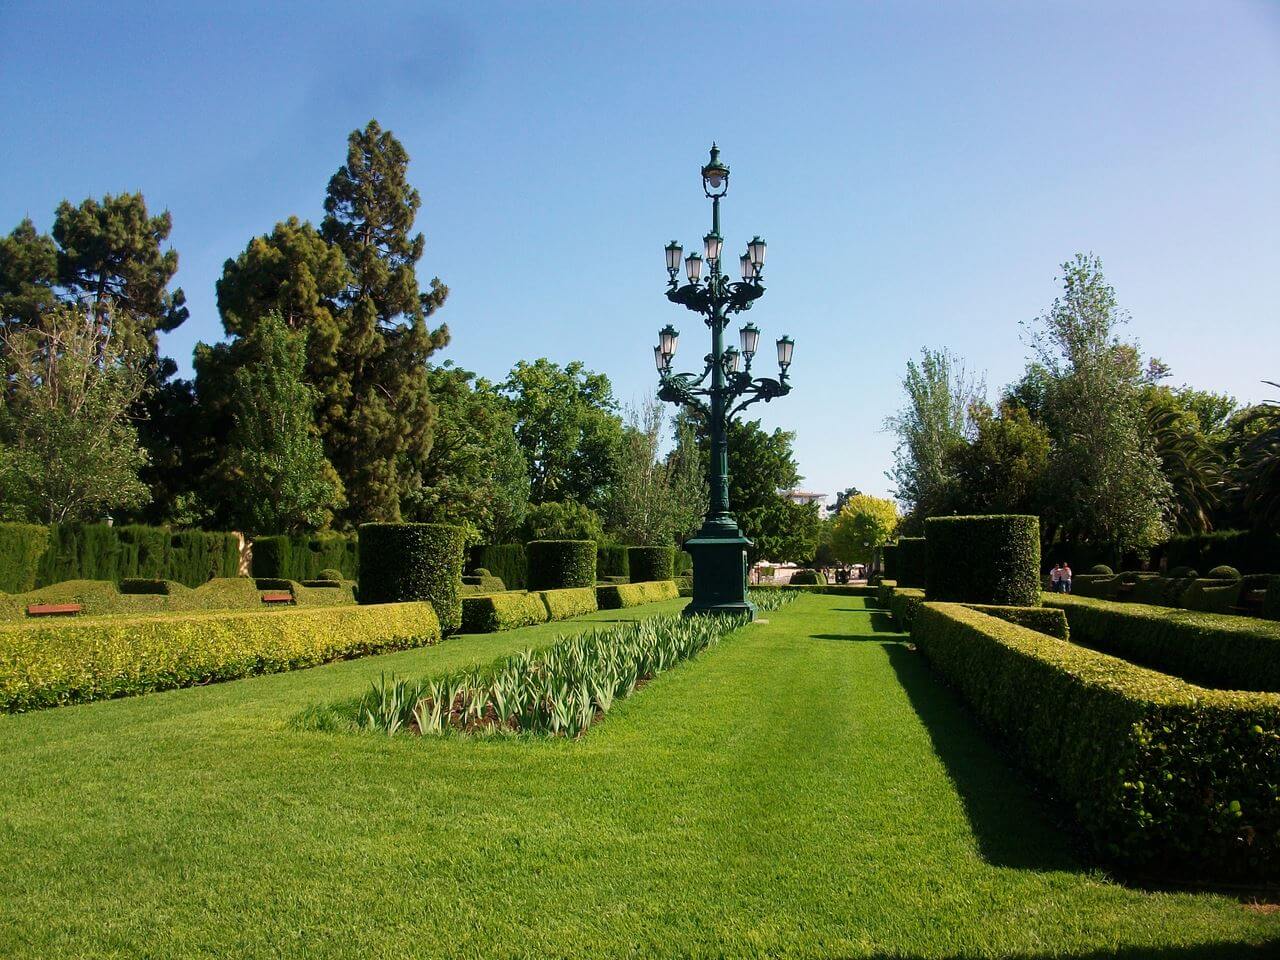 Los jardines del Real или Viveros, дворец Валенсии, туризм в Валенсии, город Валенсия, Валенсия